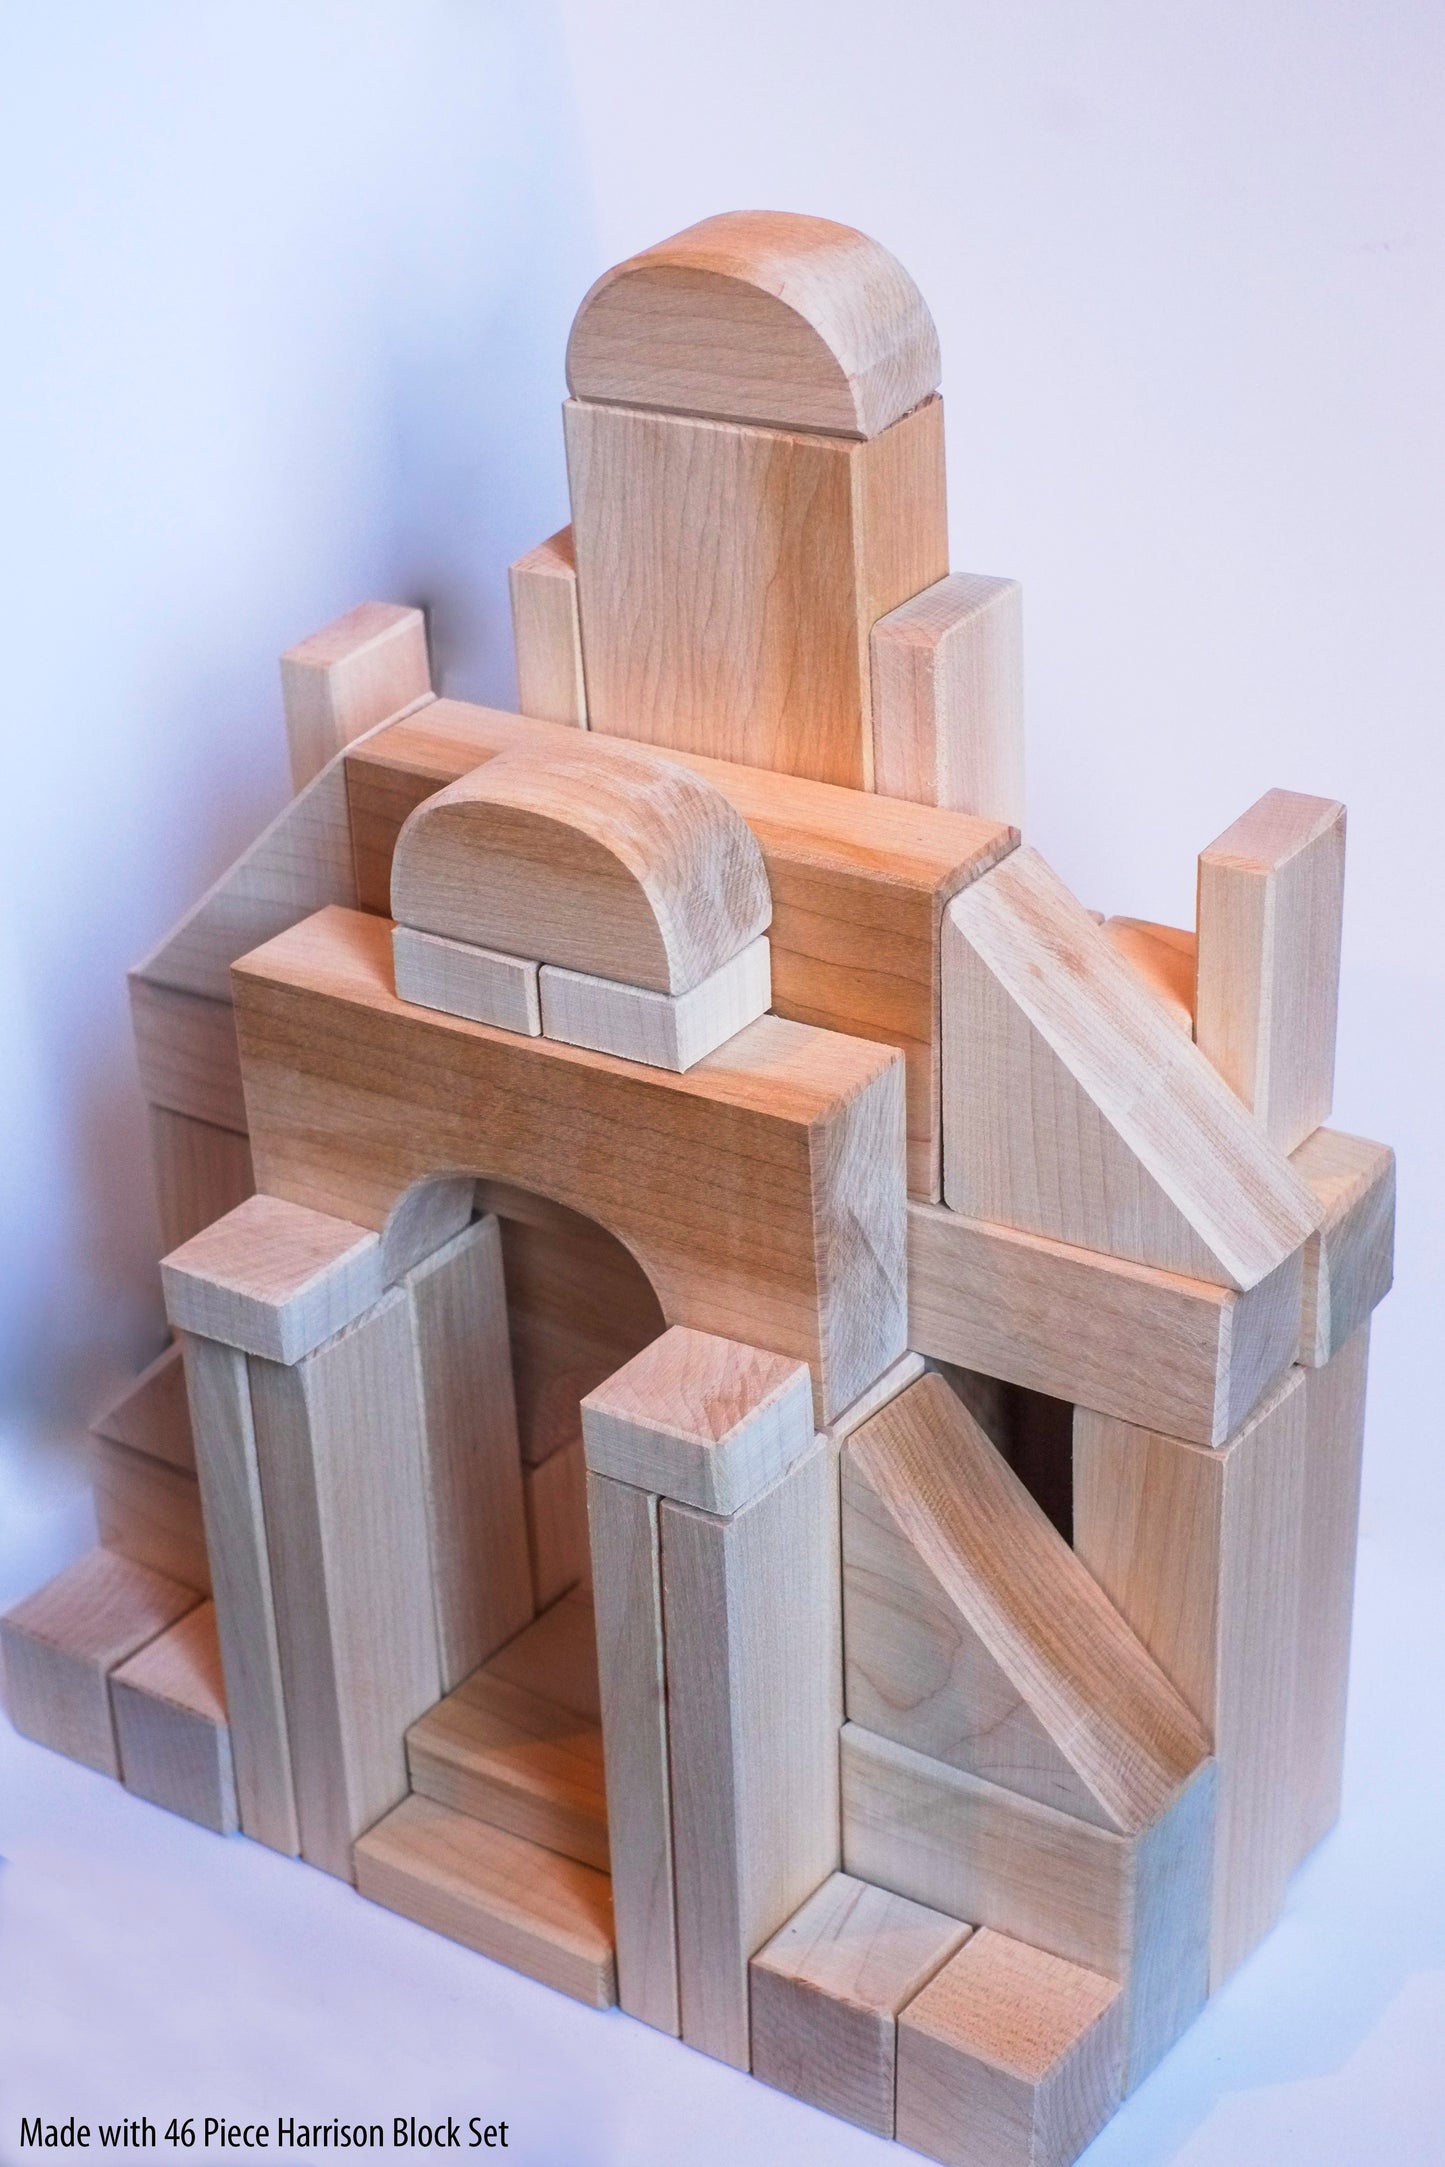 35 Piece Harrison Block Set - Unit Blocks Made in Canada